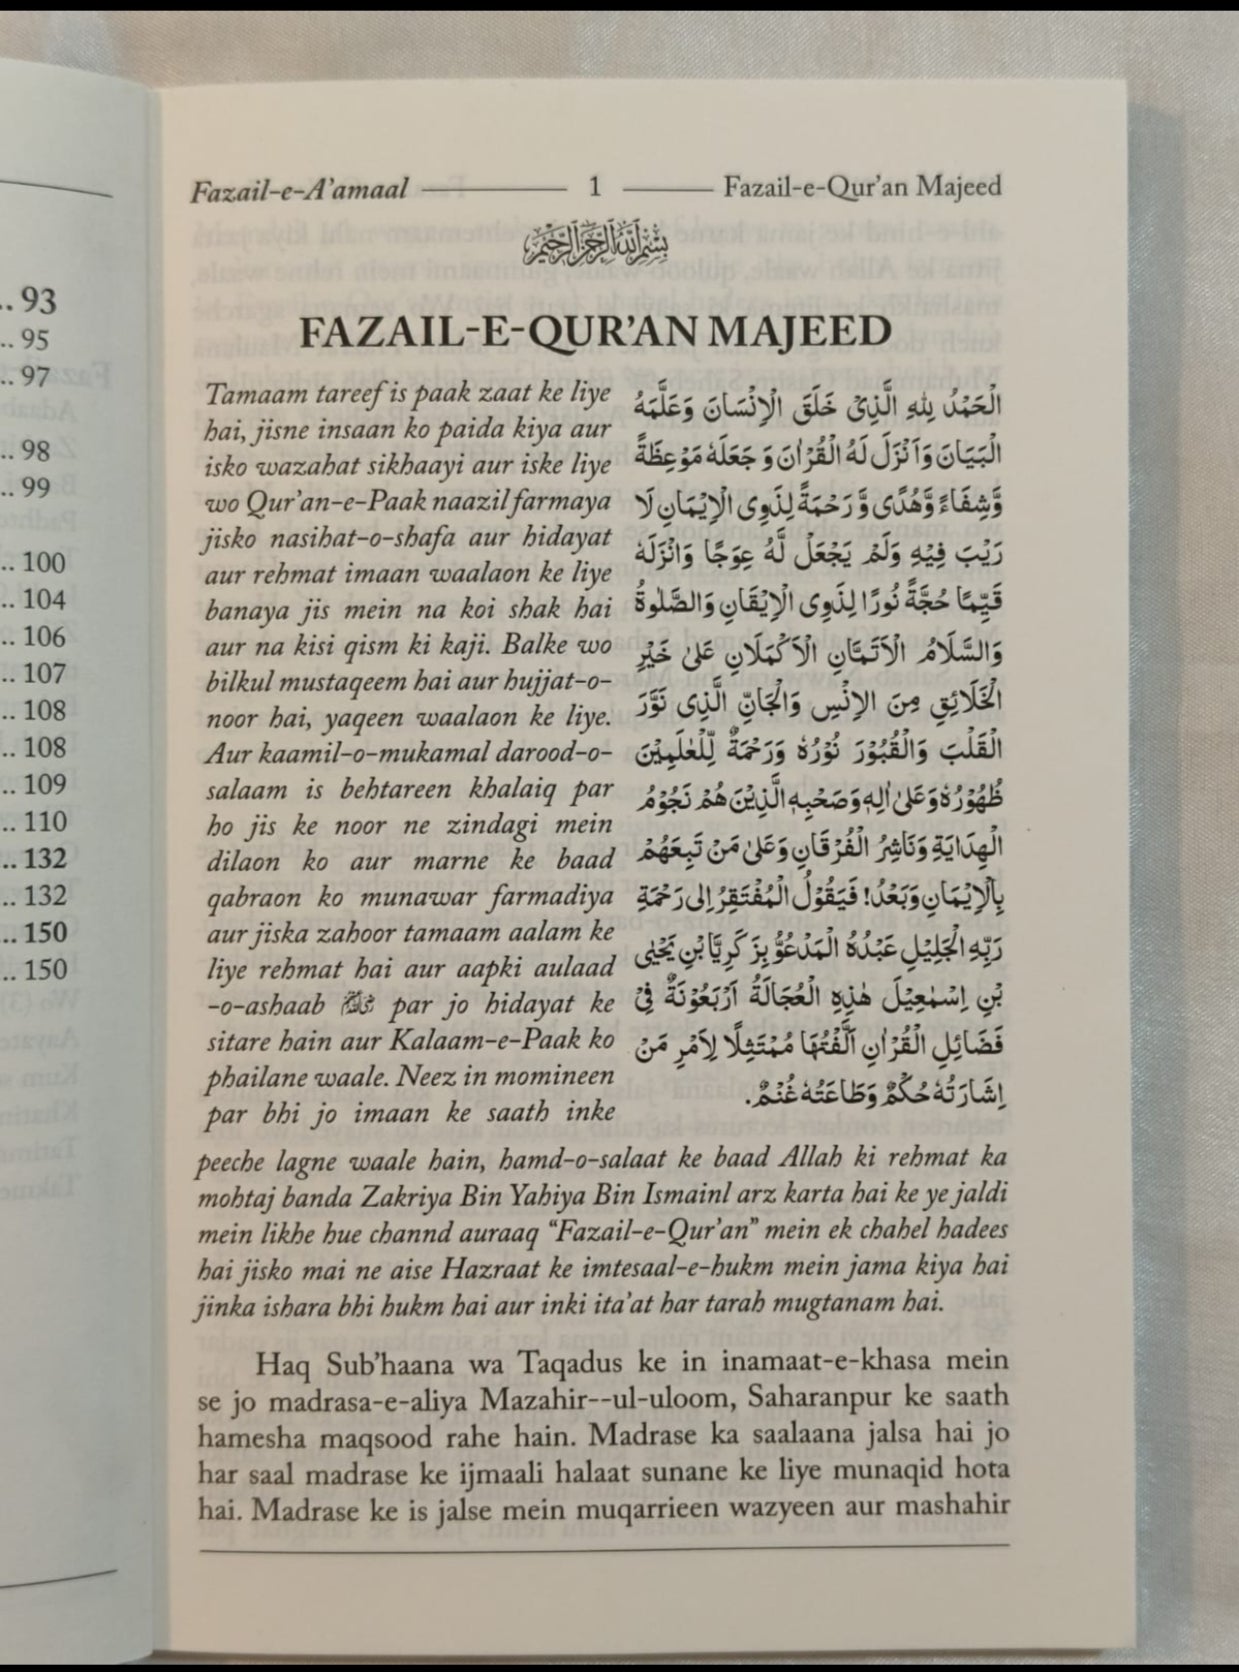 Fazail-e-Quran Fazail-e-Ramadan - alifthebookstore